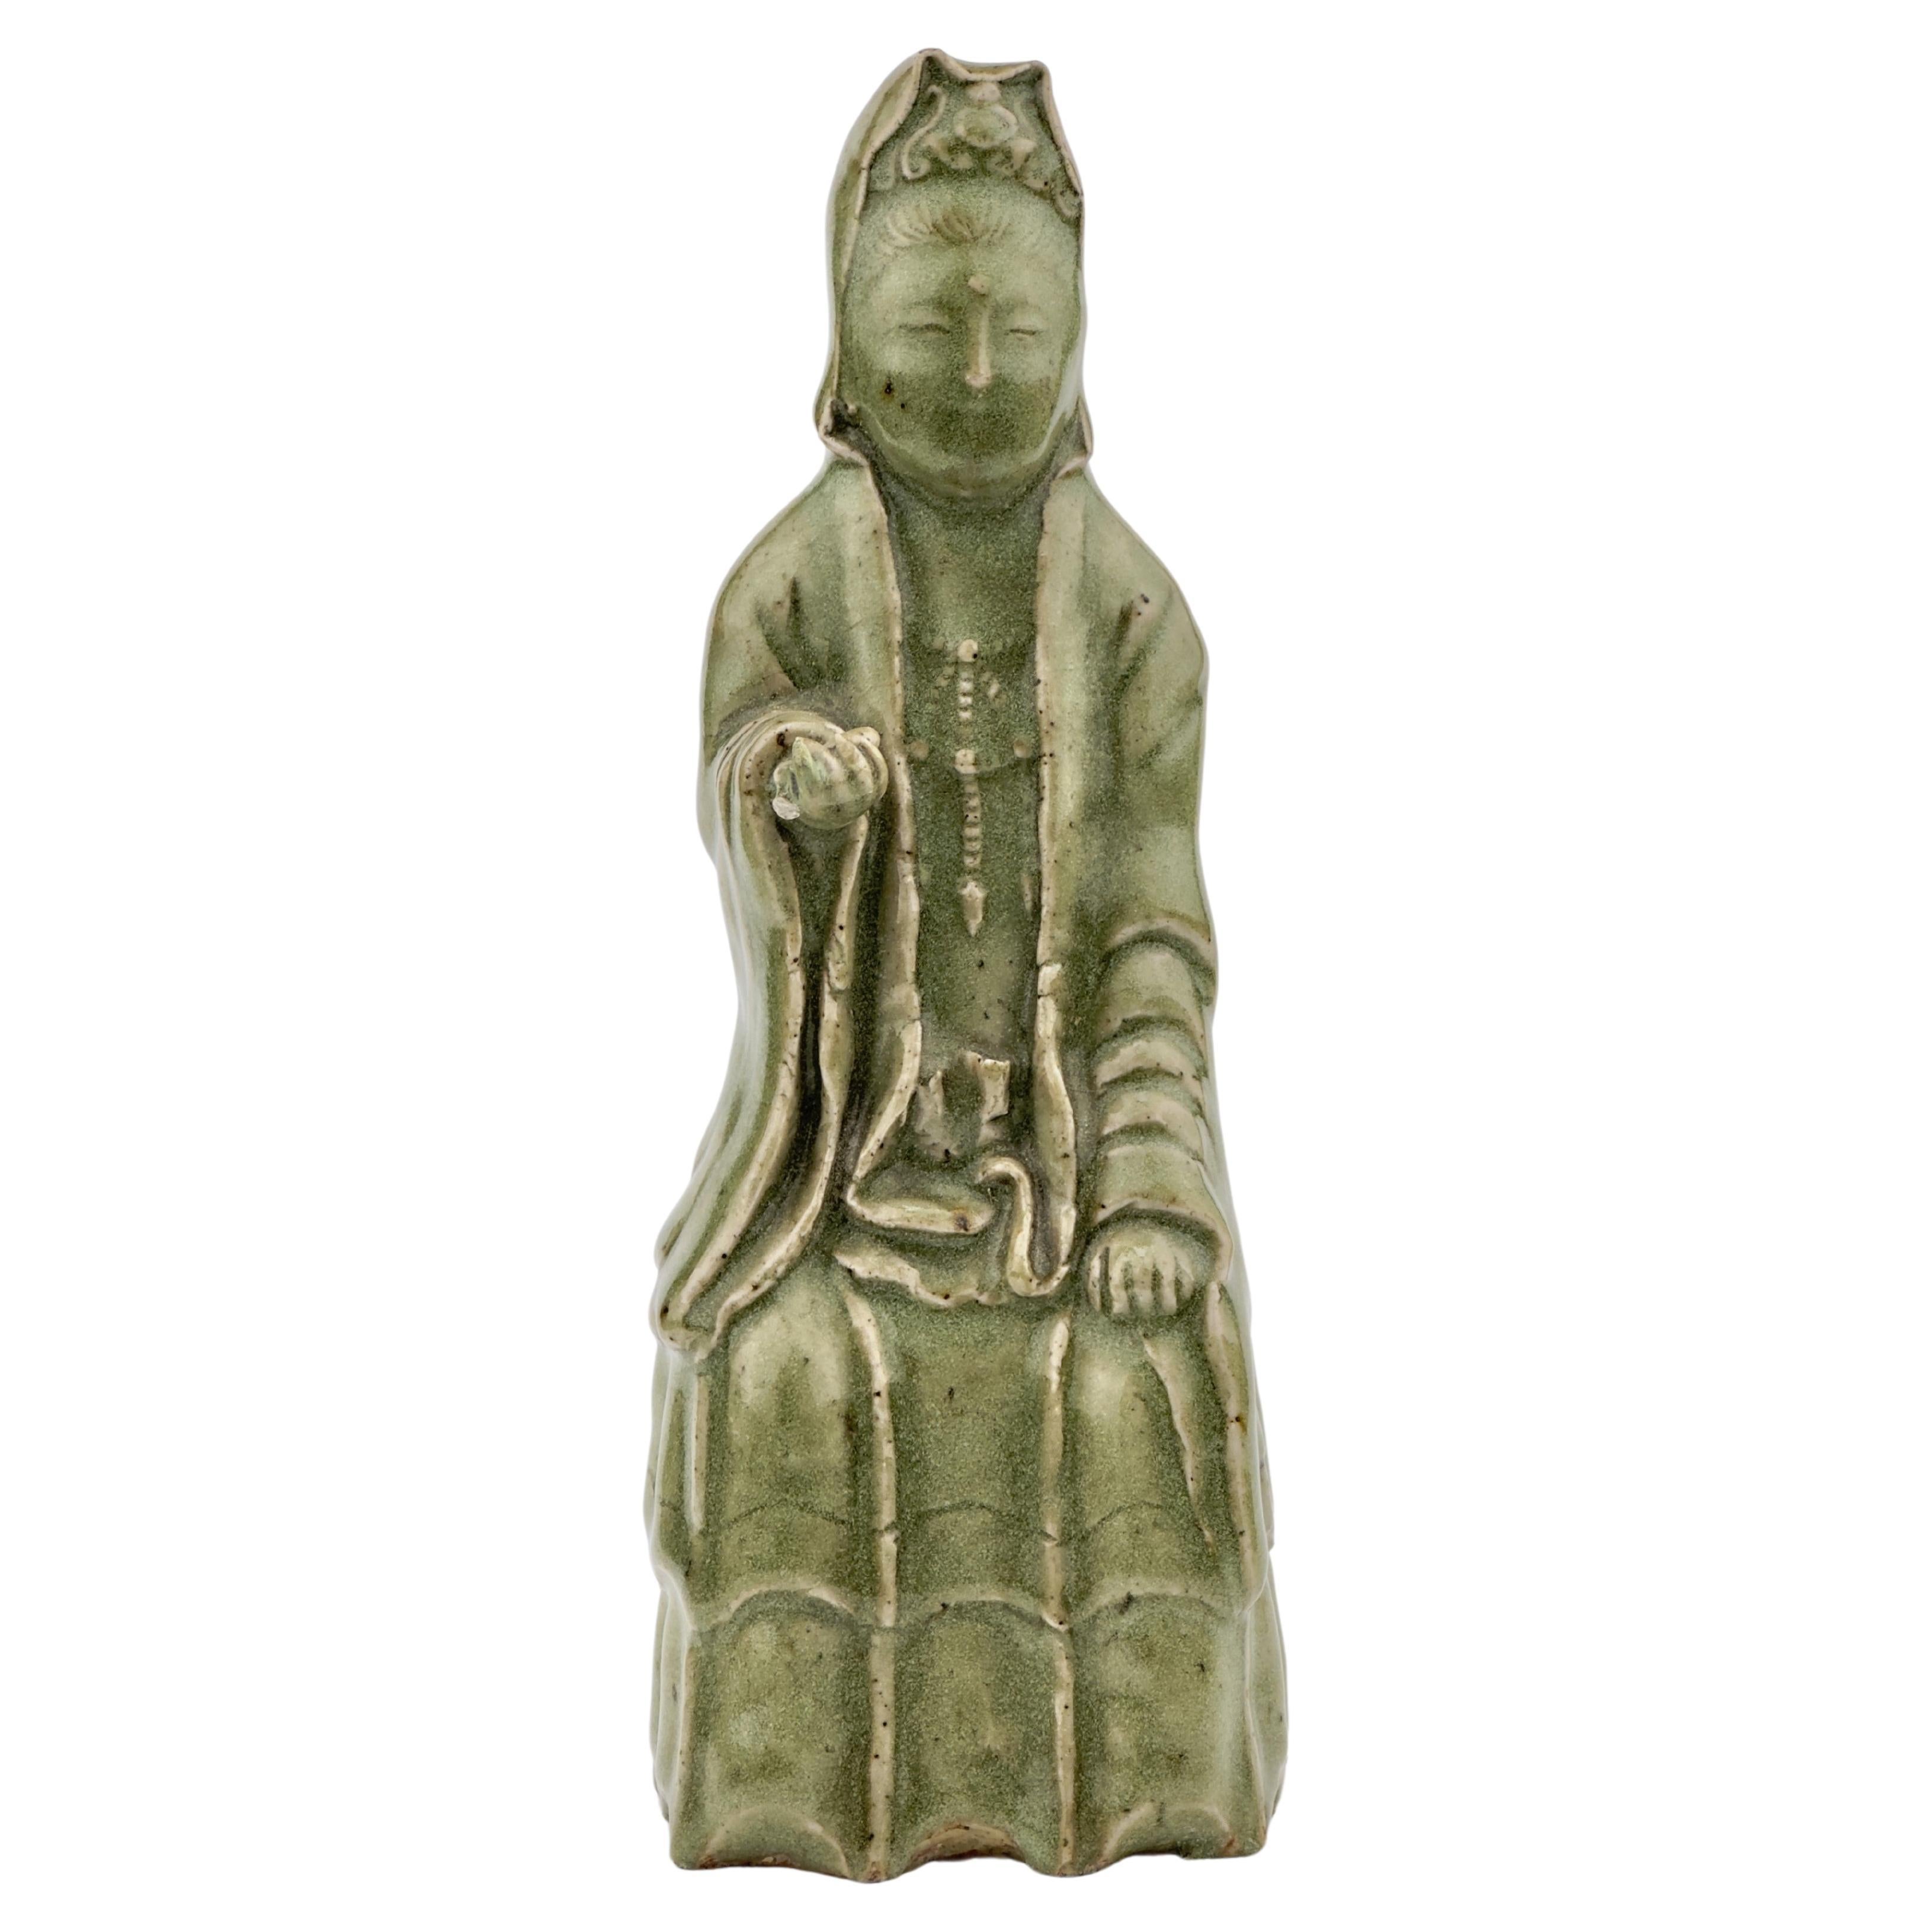 Longquan Celadon Figurine, Ming Dynasty (1368-1644)